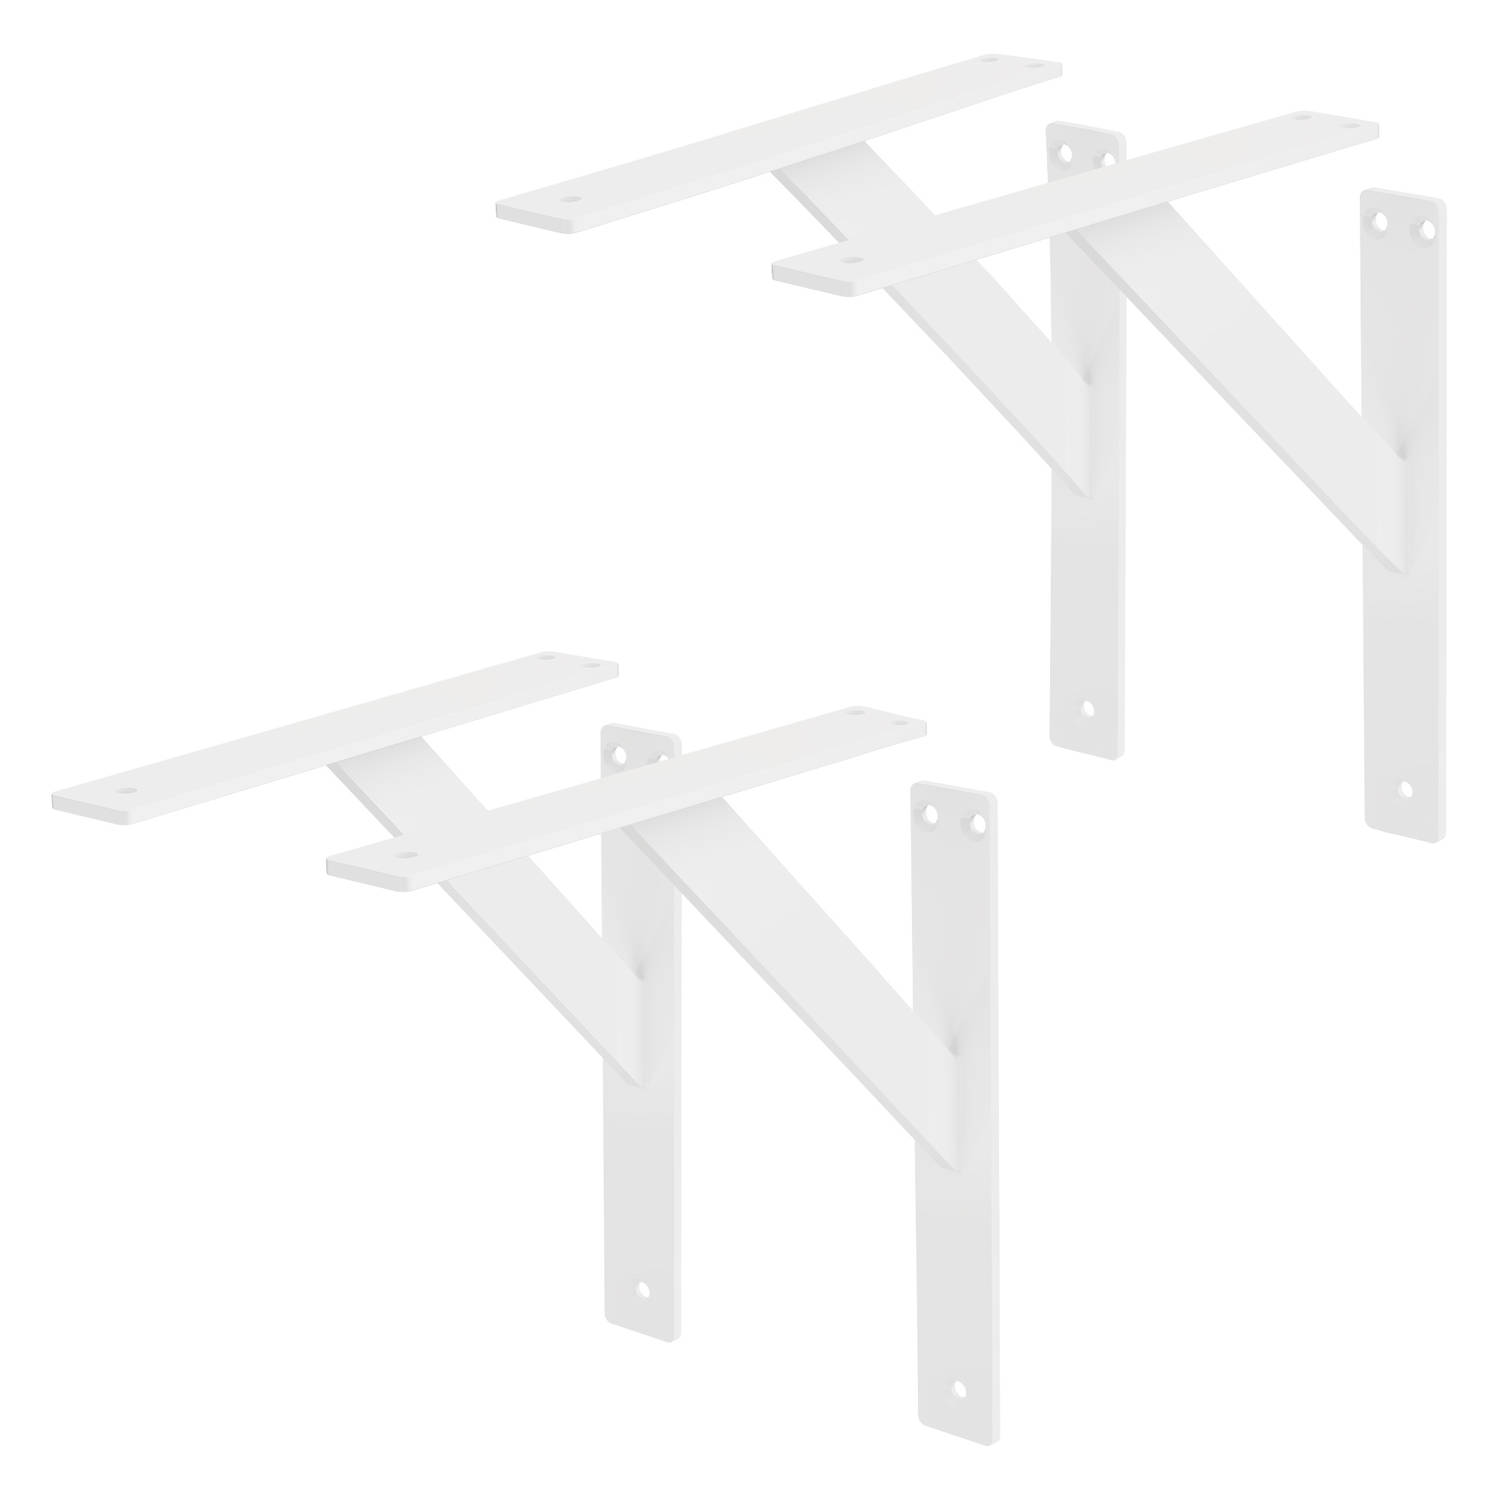 ML-Design 4 stuks plankdrager 240x240 mm, wit, aluminium, zwevende plankdrager, plankdrager, wanddrager voor plankdrager, plankdrager voor wandmontage, wandplankdrager plankdrager